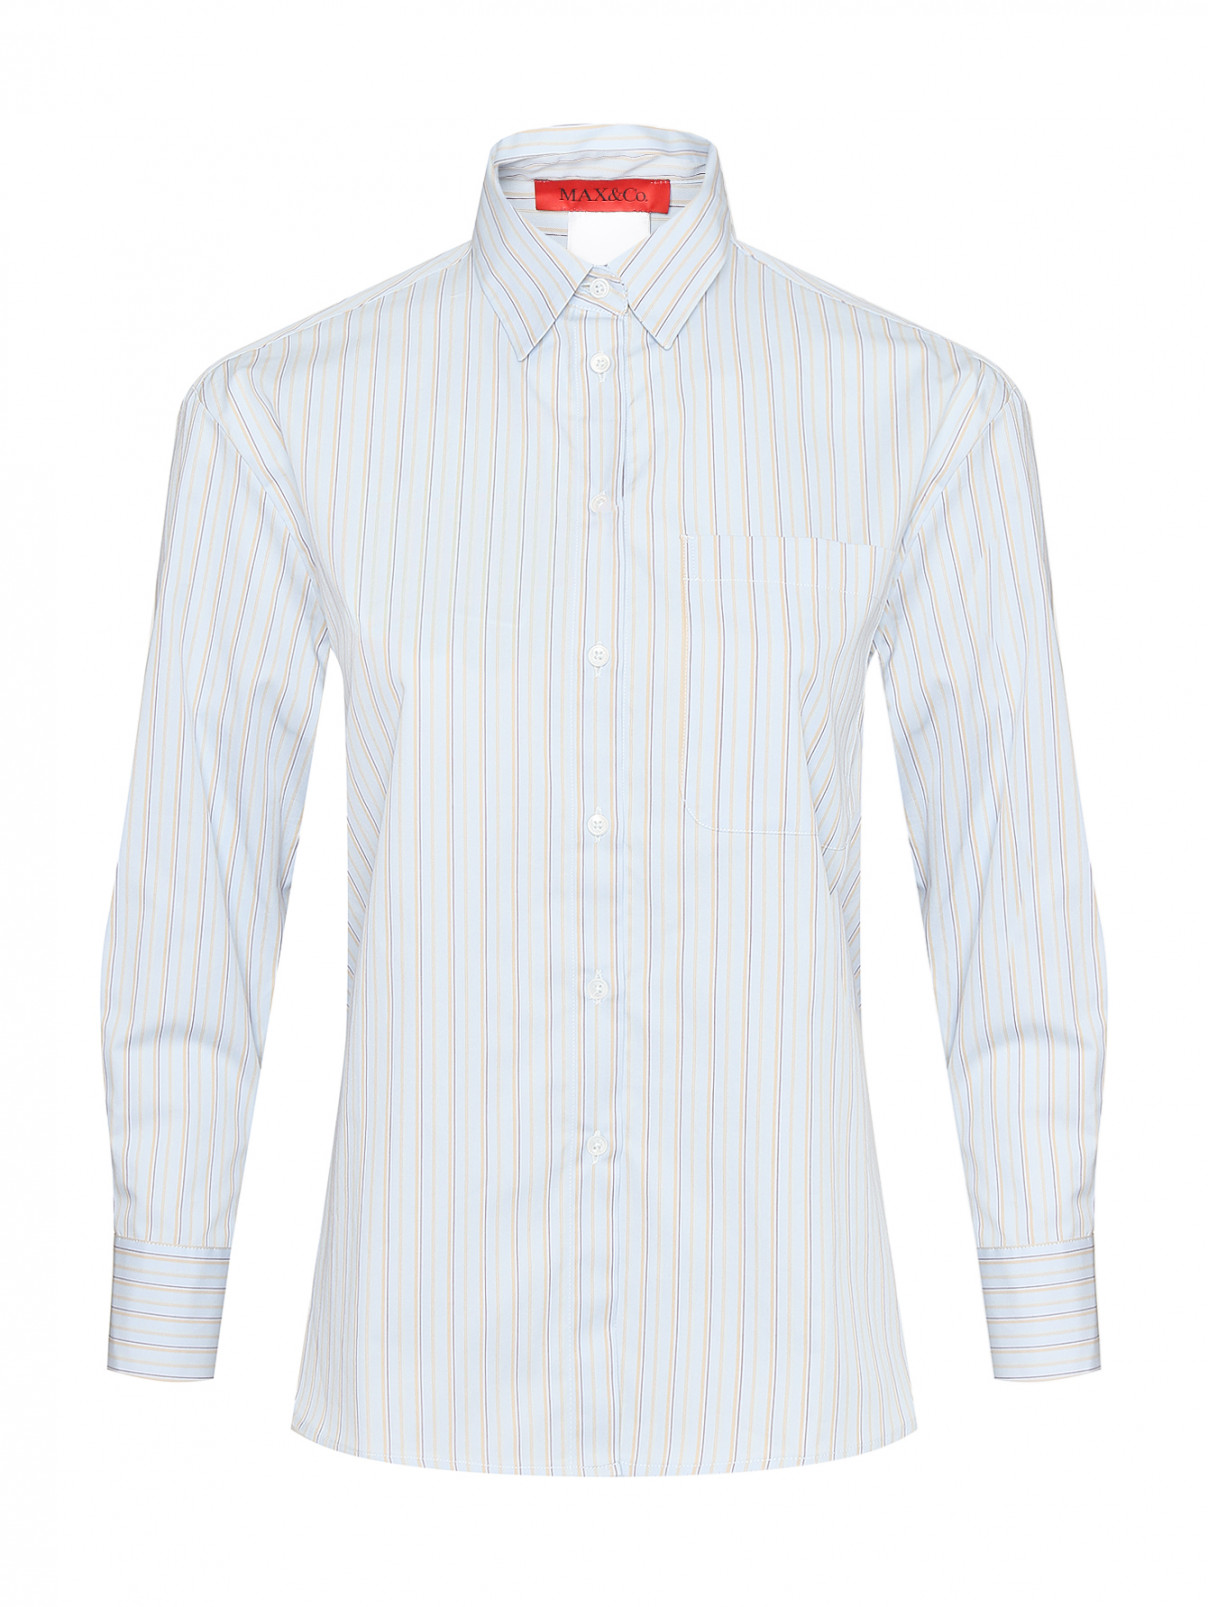 Рубашка в полоску Max&Co  –  Общий вид  – Цвет:  Синий